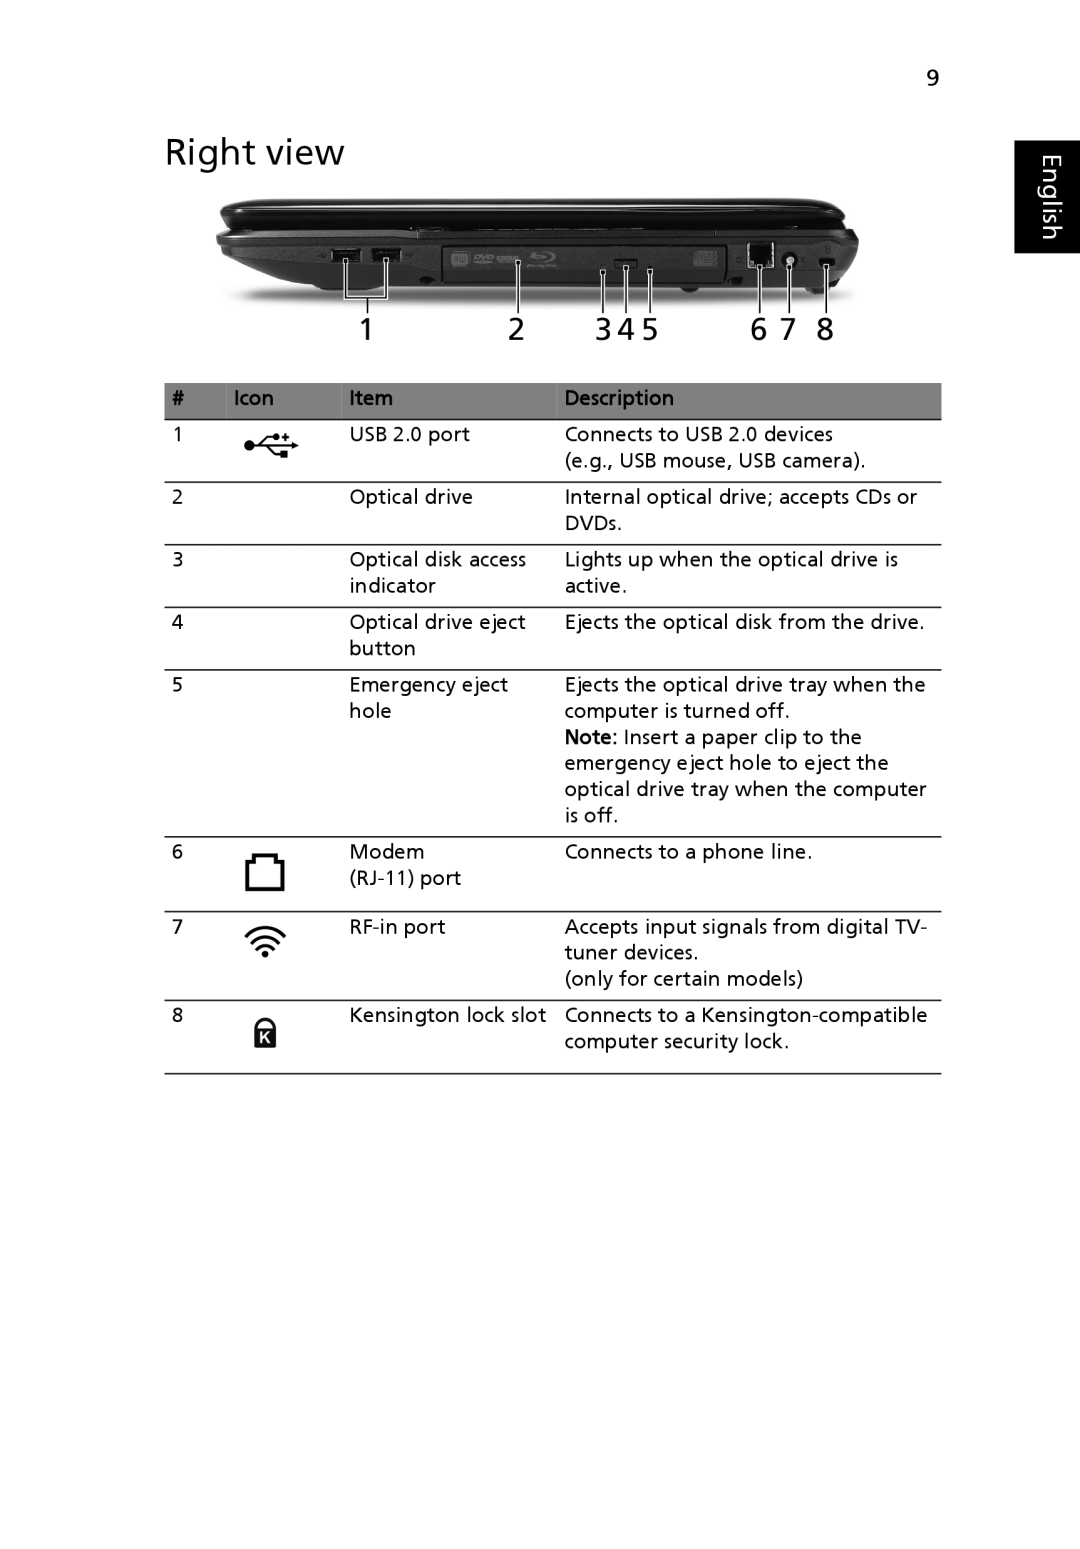 Acer 8735Z manual Right view, English, Icon, Description 